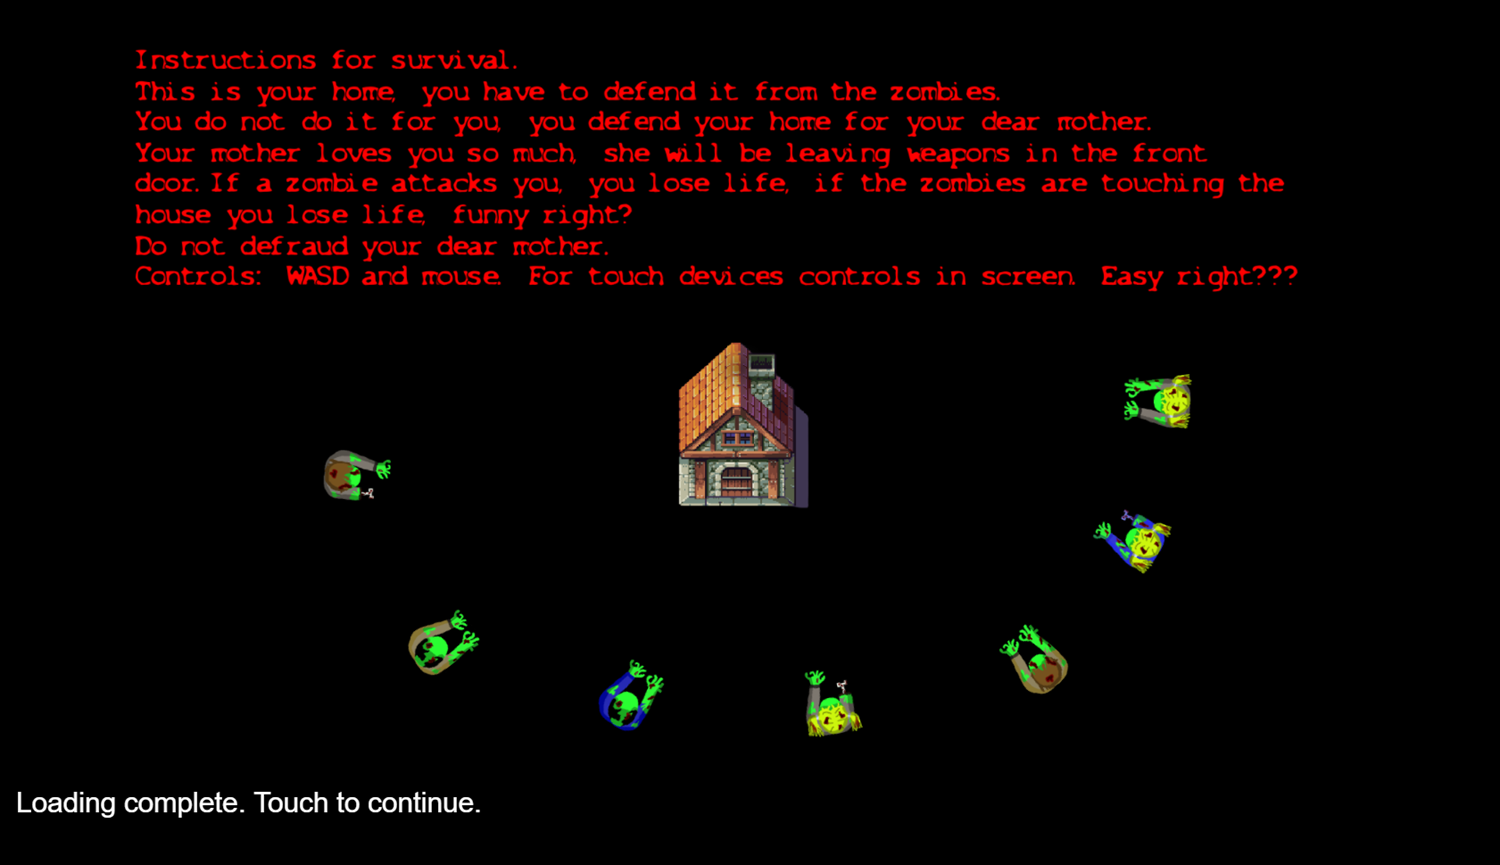 Zombie Defense Game Instructions Screenshot.